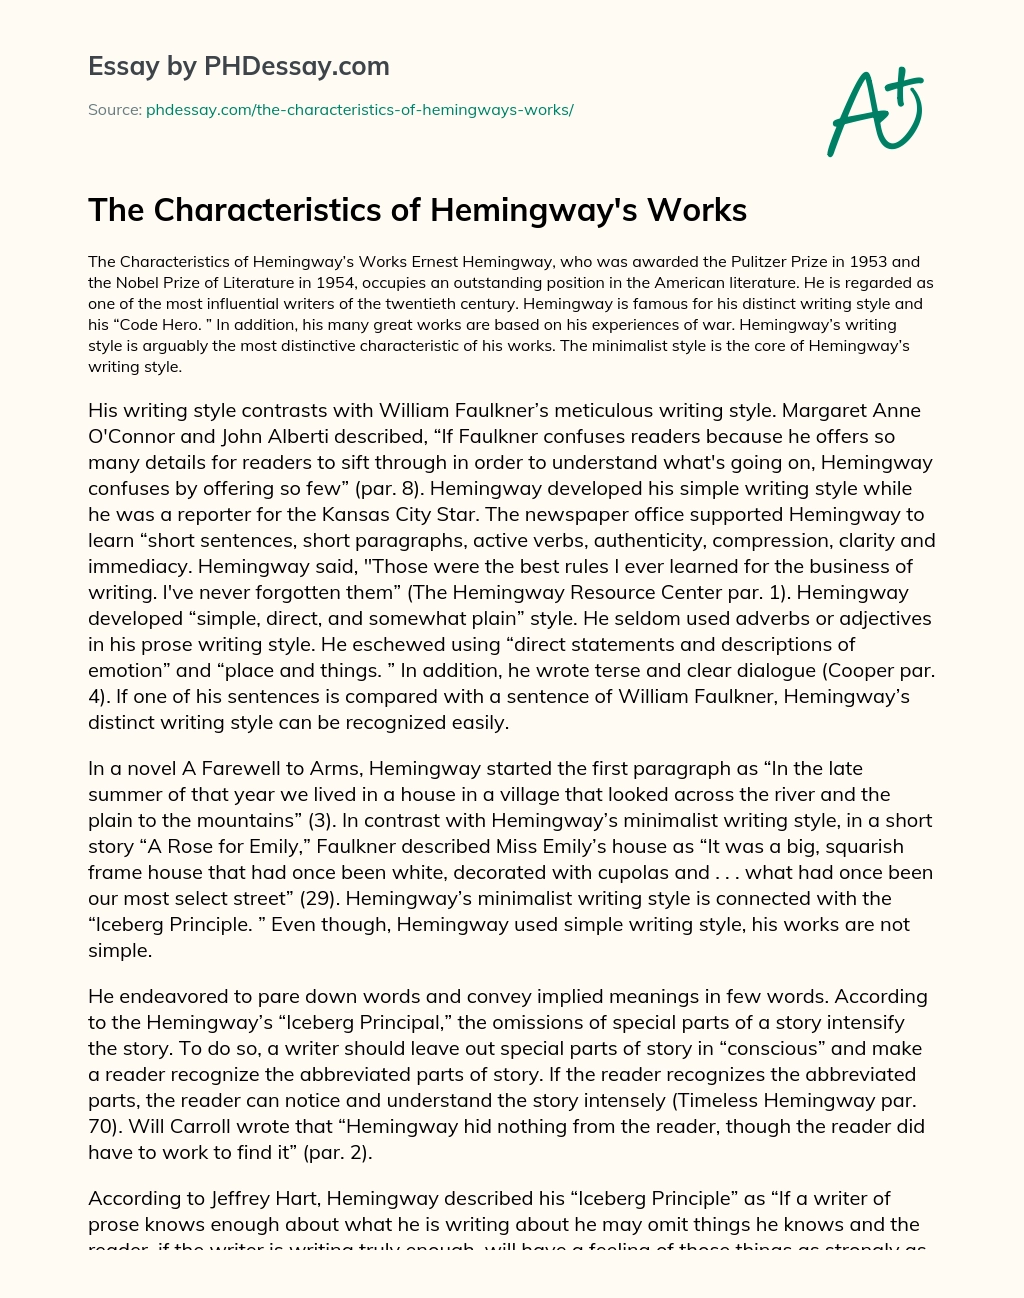 The Characteristics of Hemingway’s Works essay